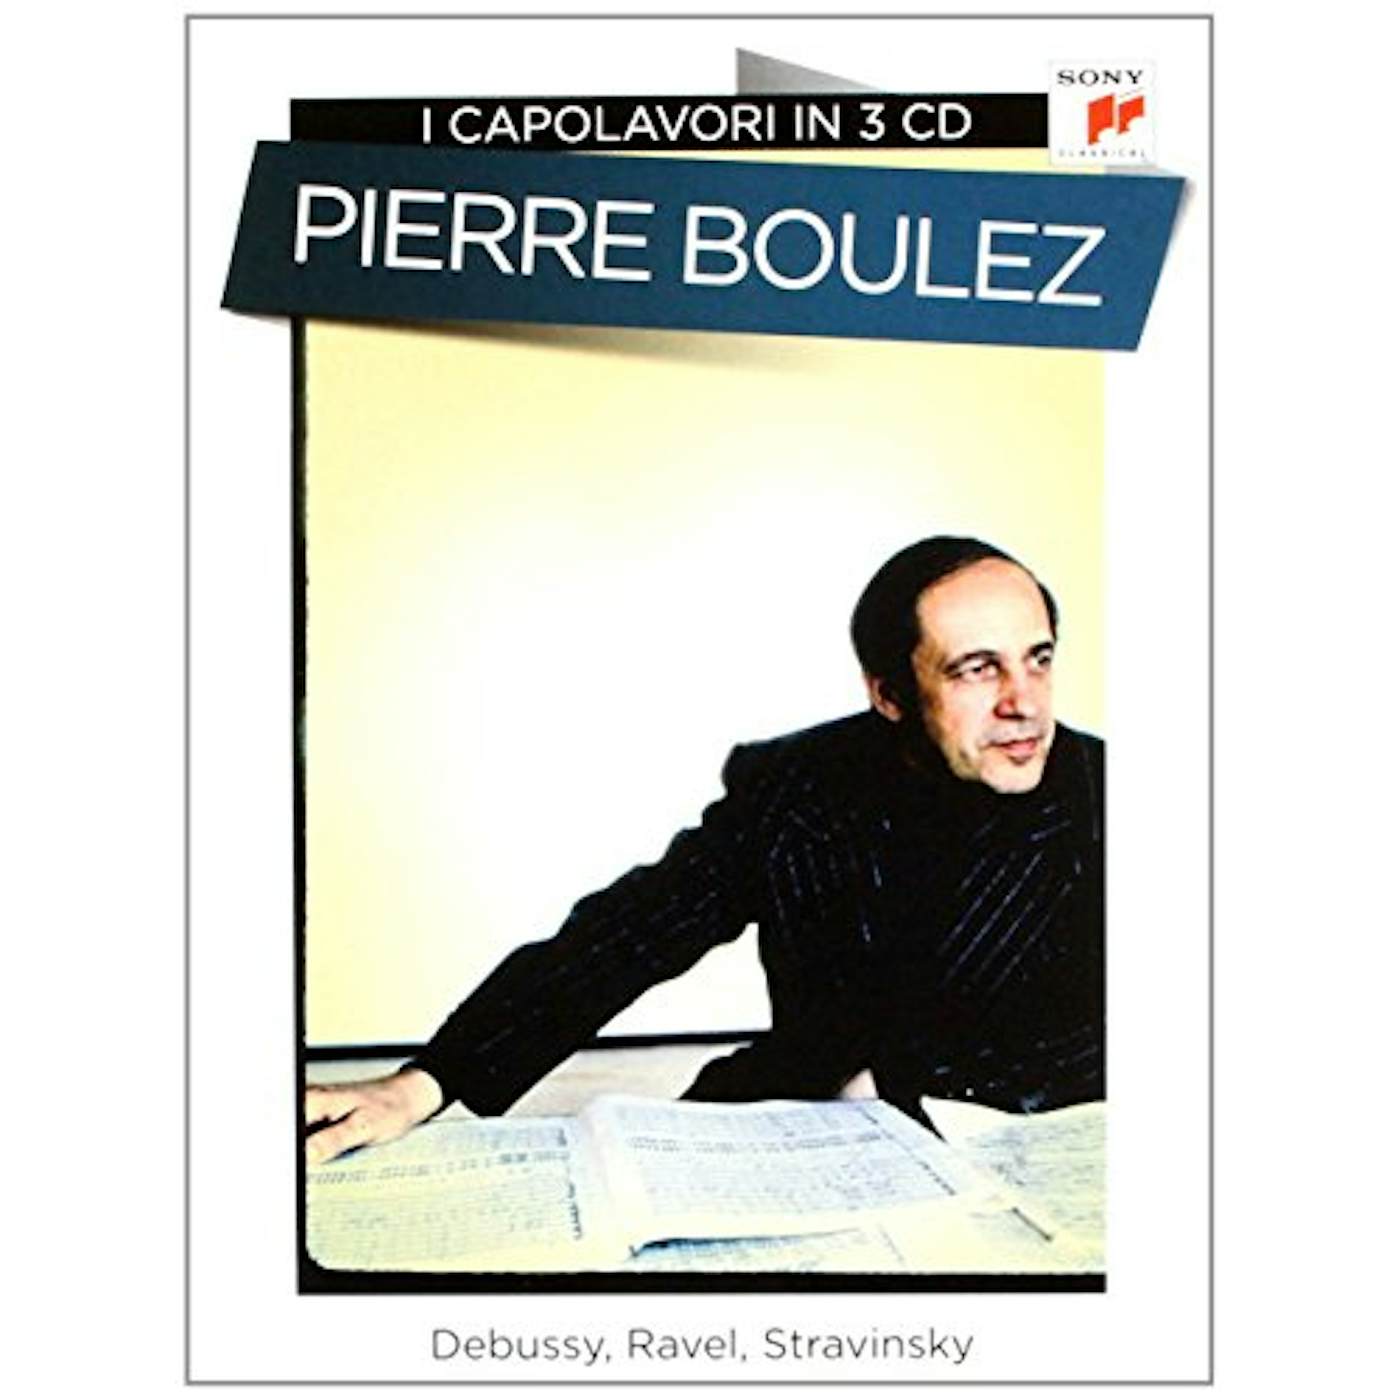 PIERRE BOULEZ-CAPOLAVORI CD